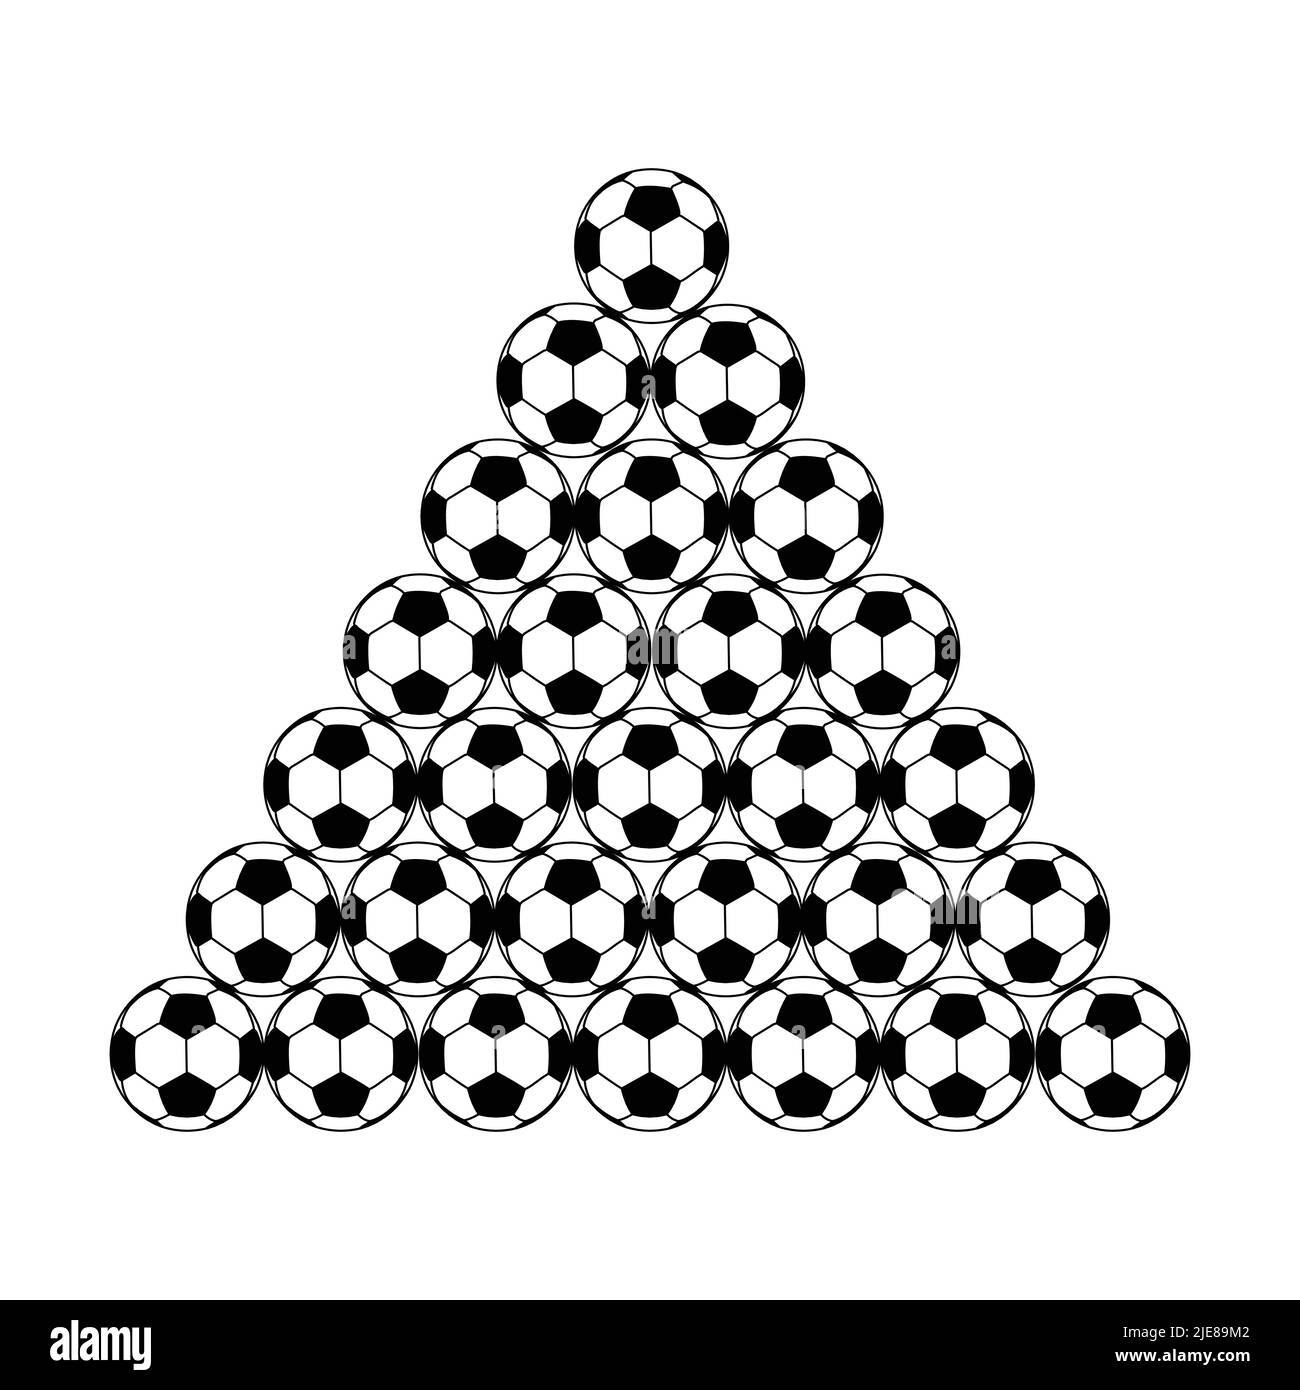 Fußball ist in einer Pyramide Art angeordnet gestapelt. vektor Stock Vektor